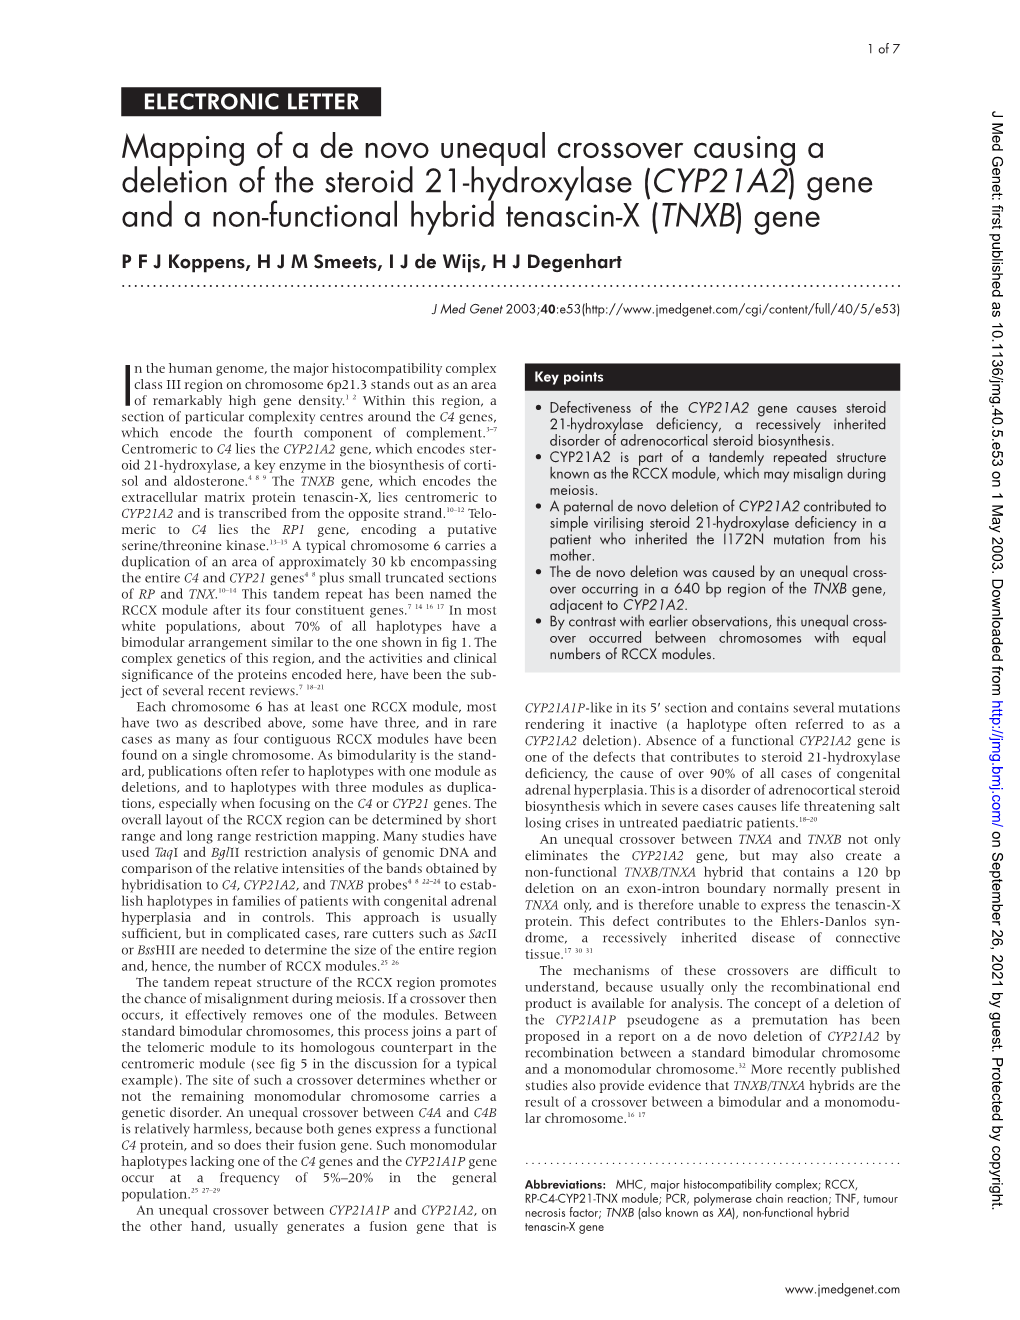 (CYP21A2) Gene and a Non-Functional Hybrid Tenascin-X (TNXB) Gene P F J Koppens,Hjmsmeets,Ijdewijs, H J Degenhart